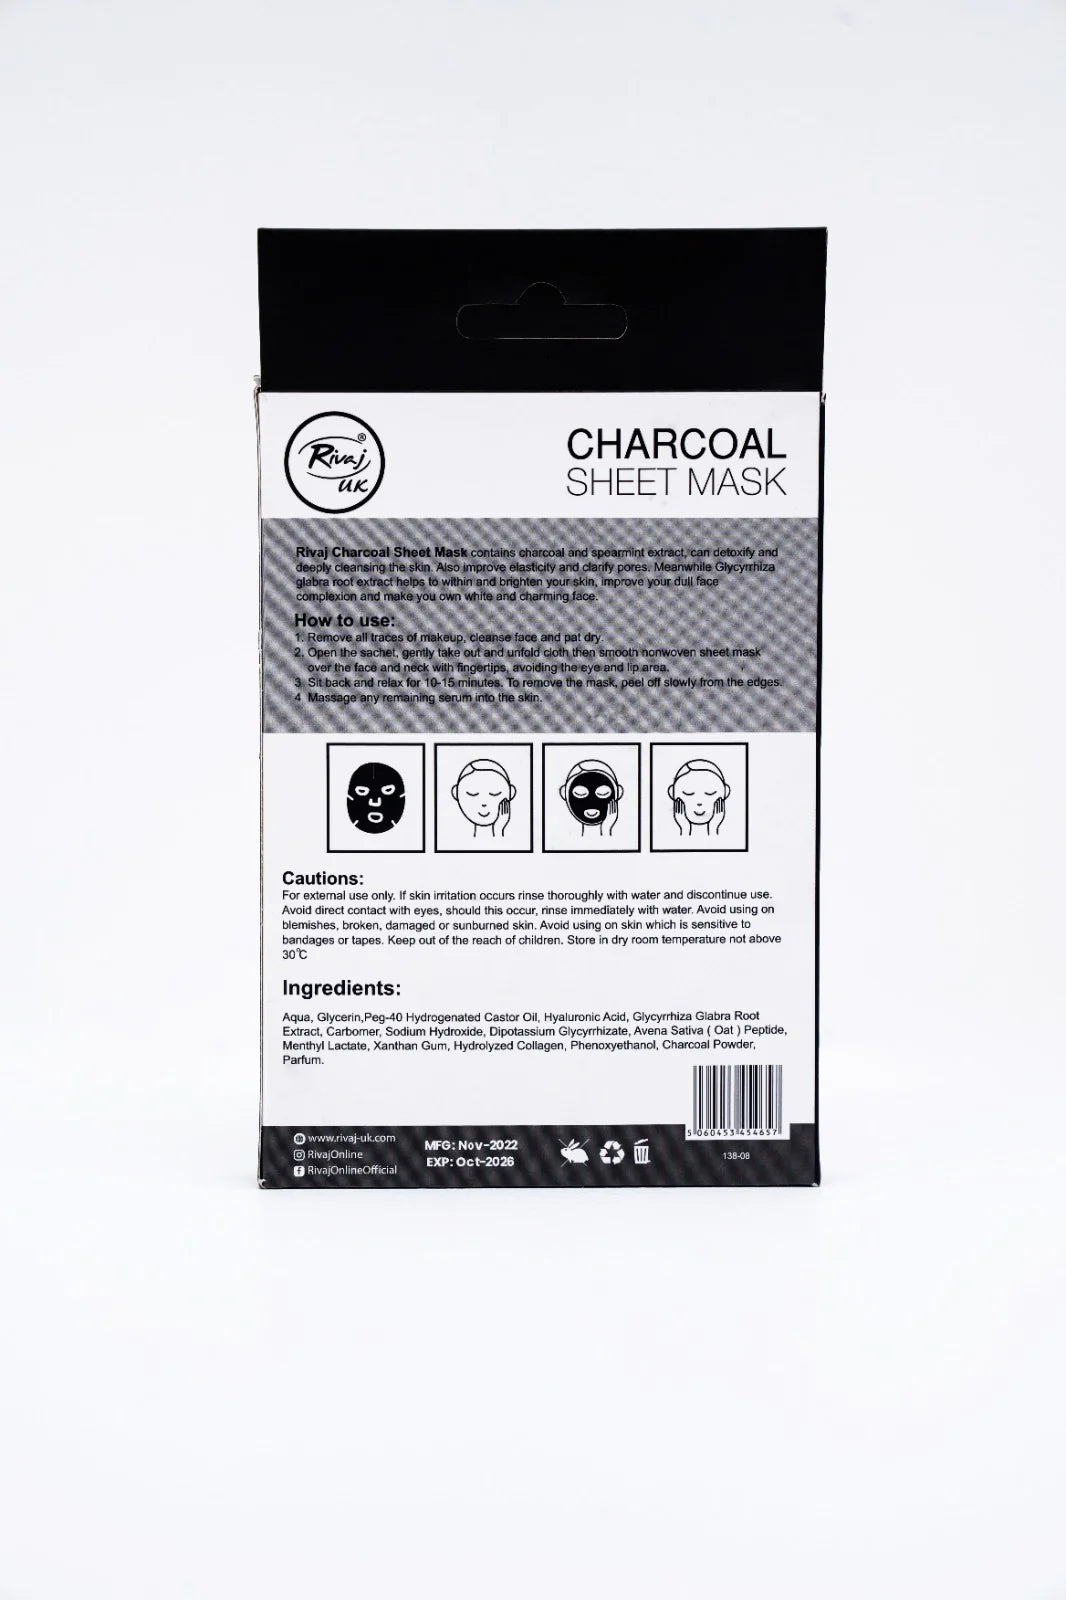 RIVAJ UK Charcoal Sheet Mask